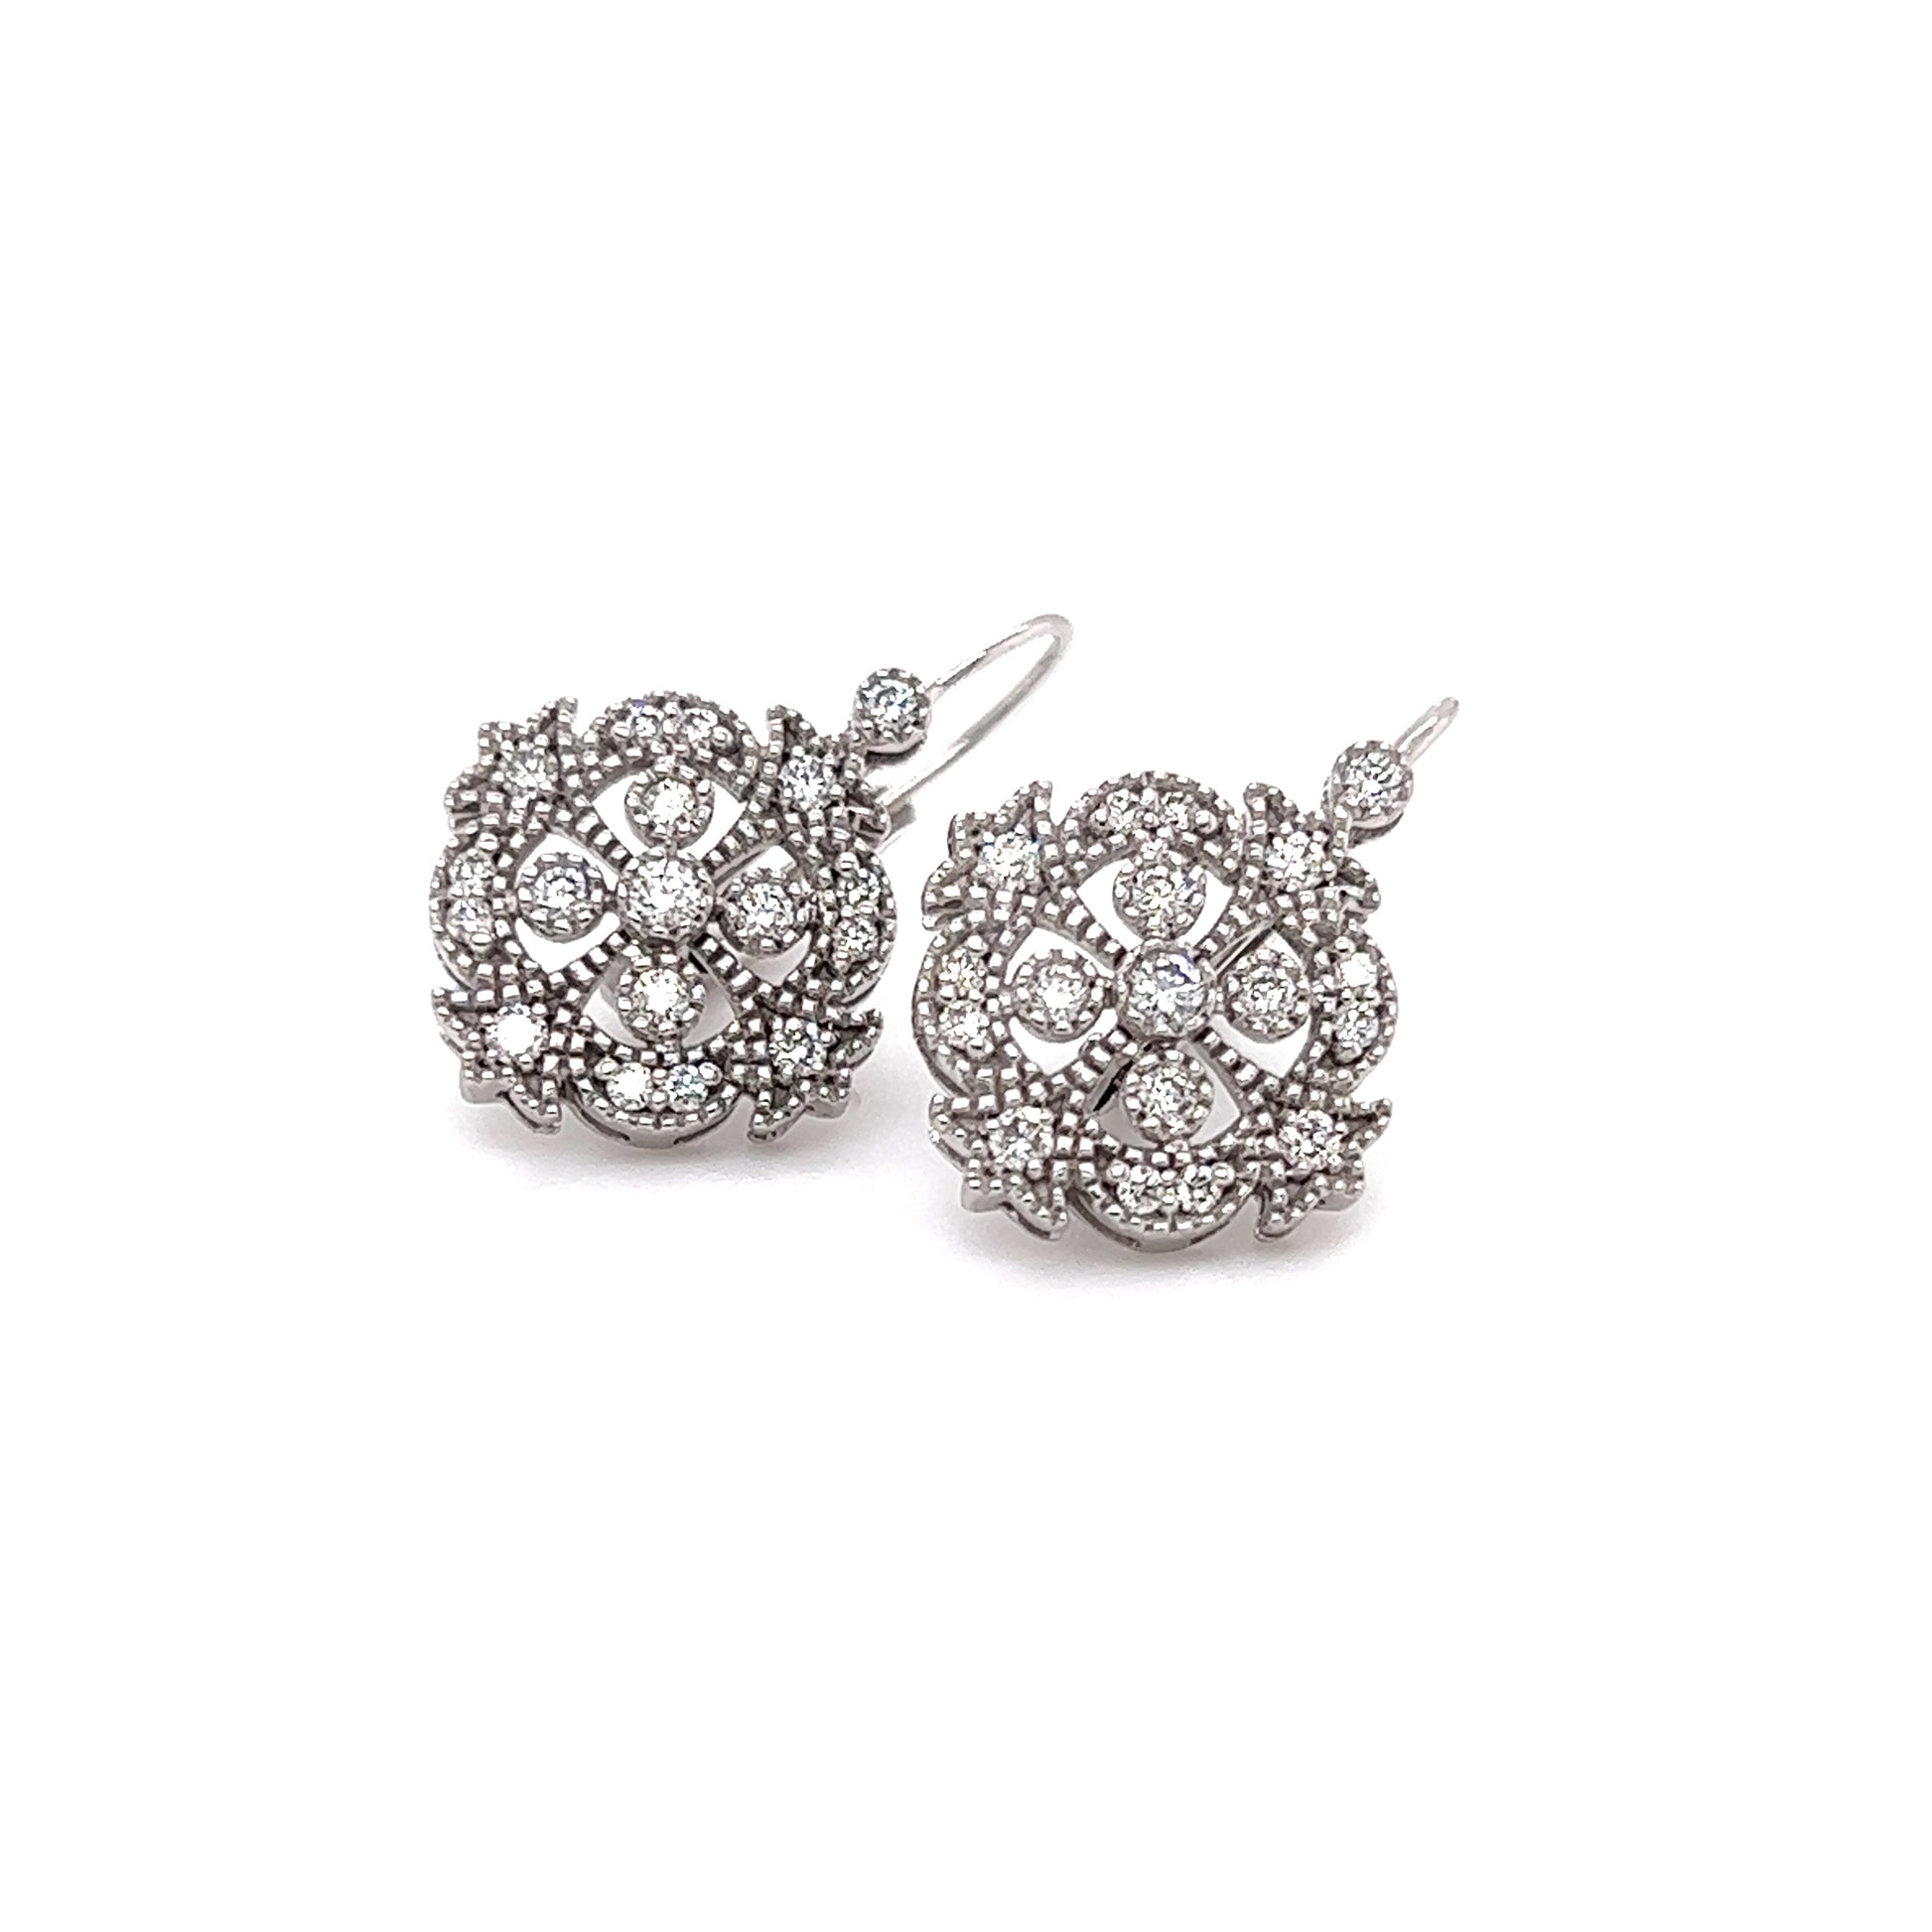 Diamond Dangle Earrings with Milgrain Details in 14K White Gold Front View